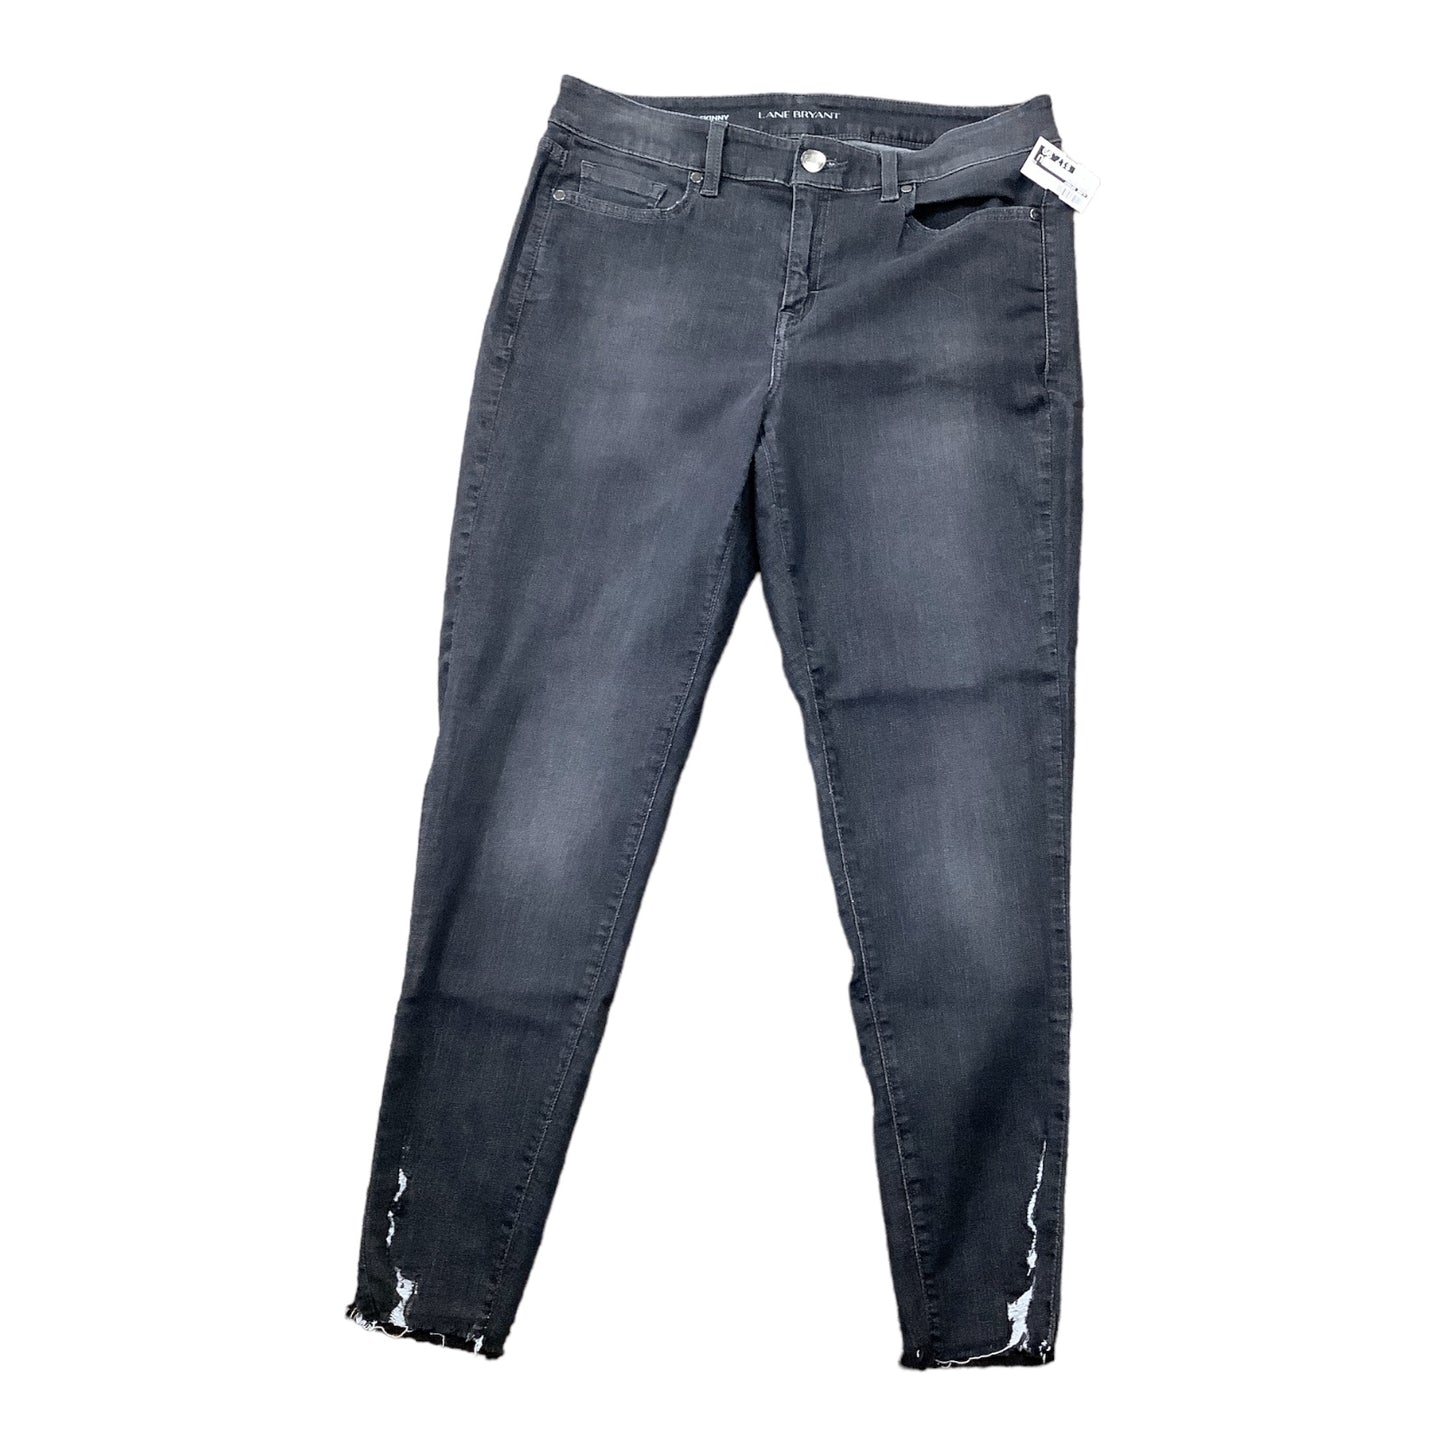 Jeans Skinny By Lane Bryant  Size: 14